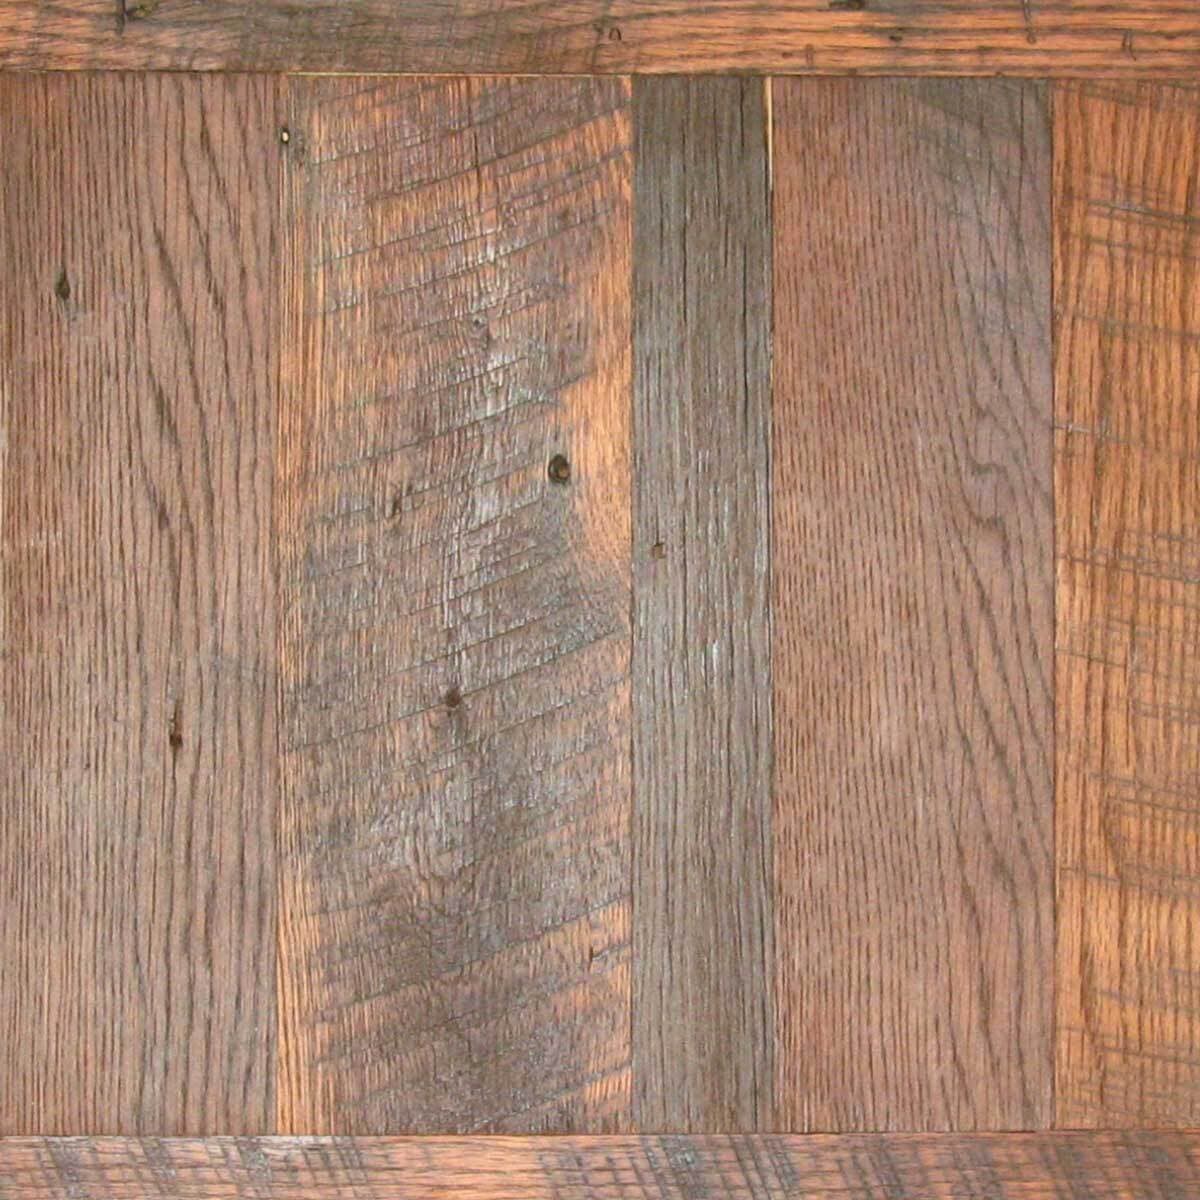 Natural oiled Carolina Character Oak wood finish by whole log lumber